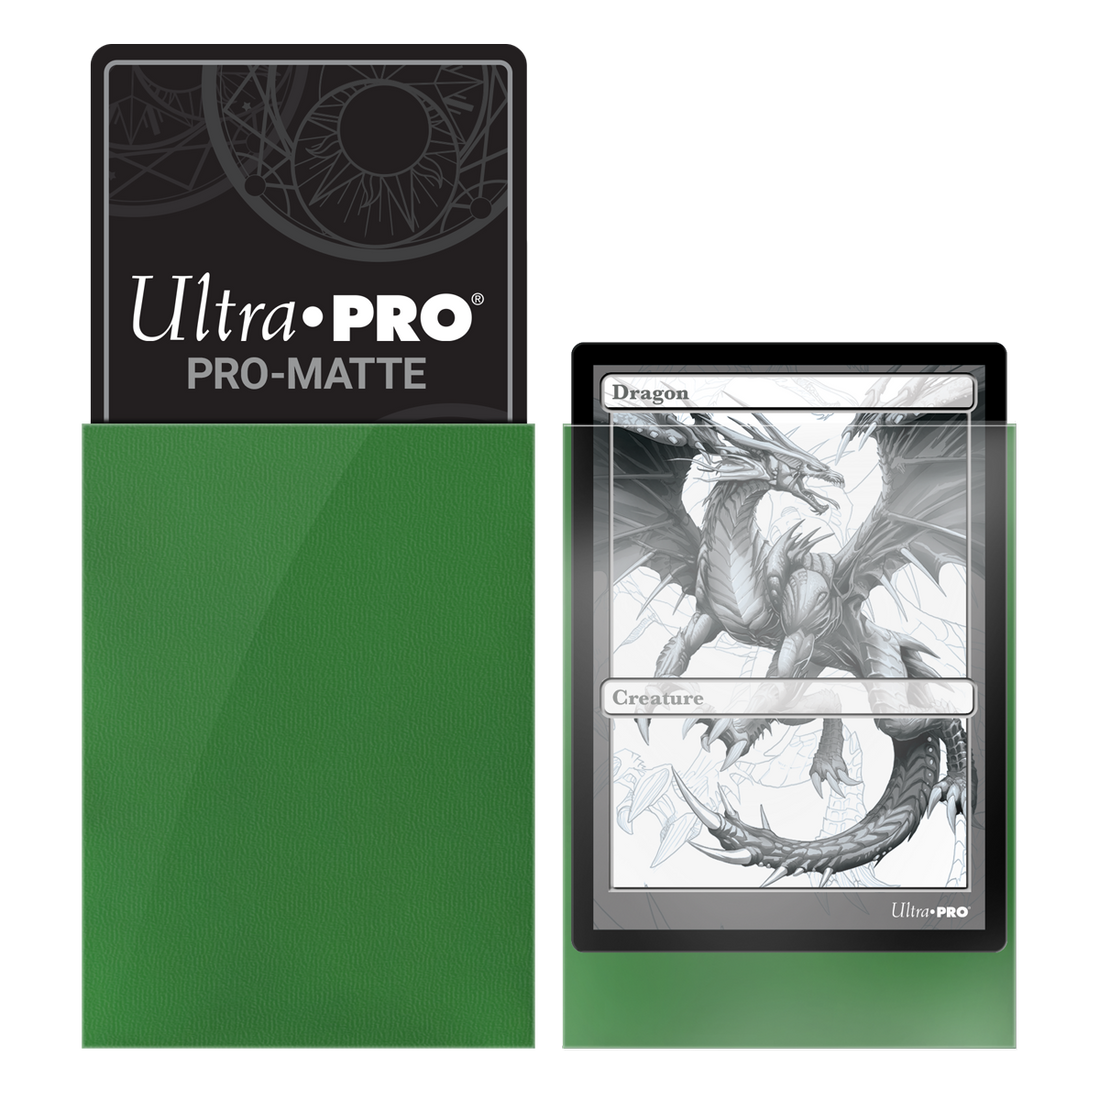 UP - Standard Sleeves - Pro-Matte - Green (100Sleeves)